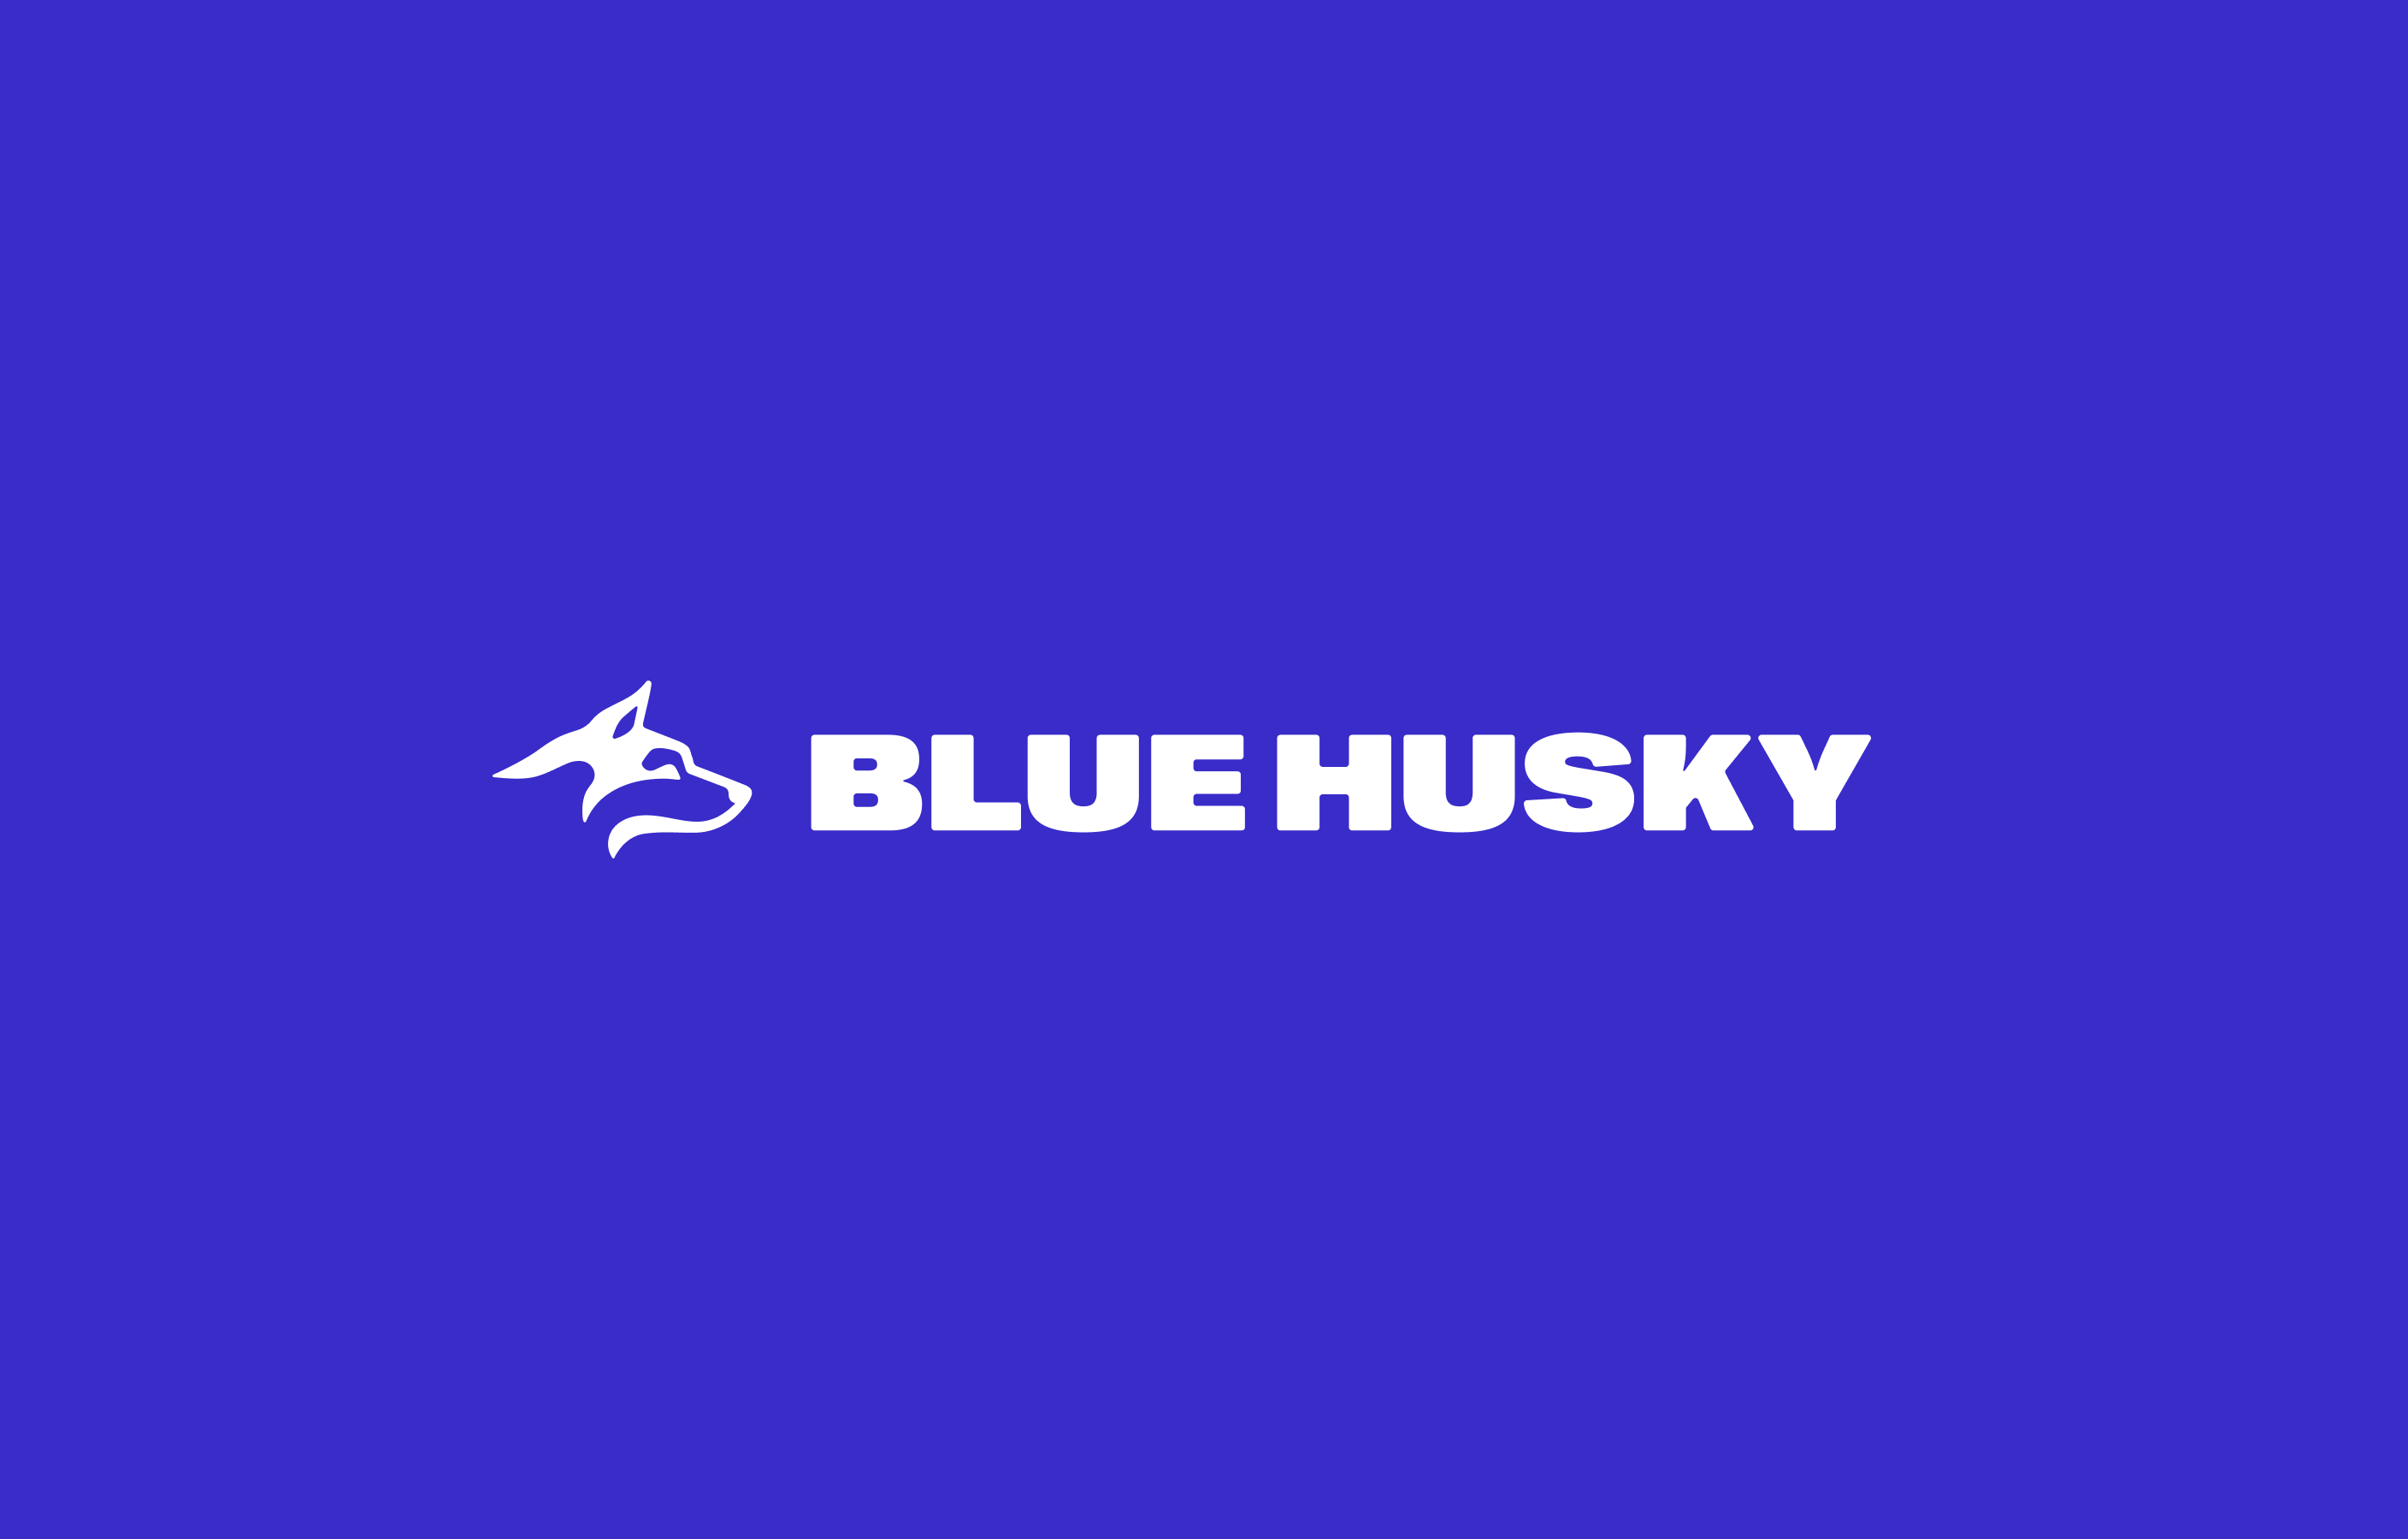 New Blue Husky logo, white text sitting on a vivid blue background